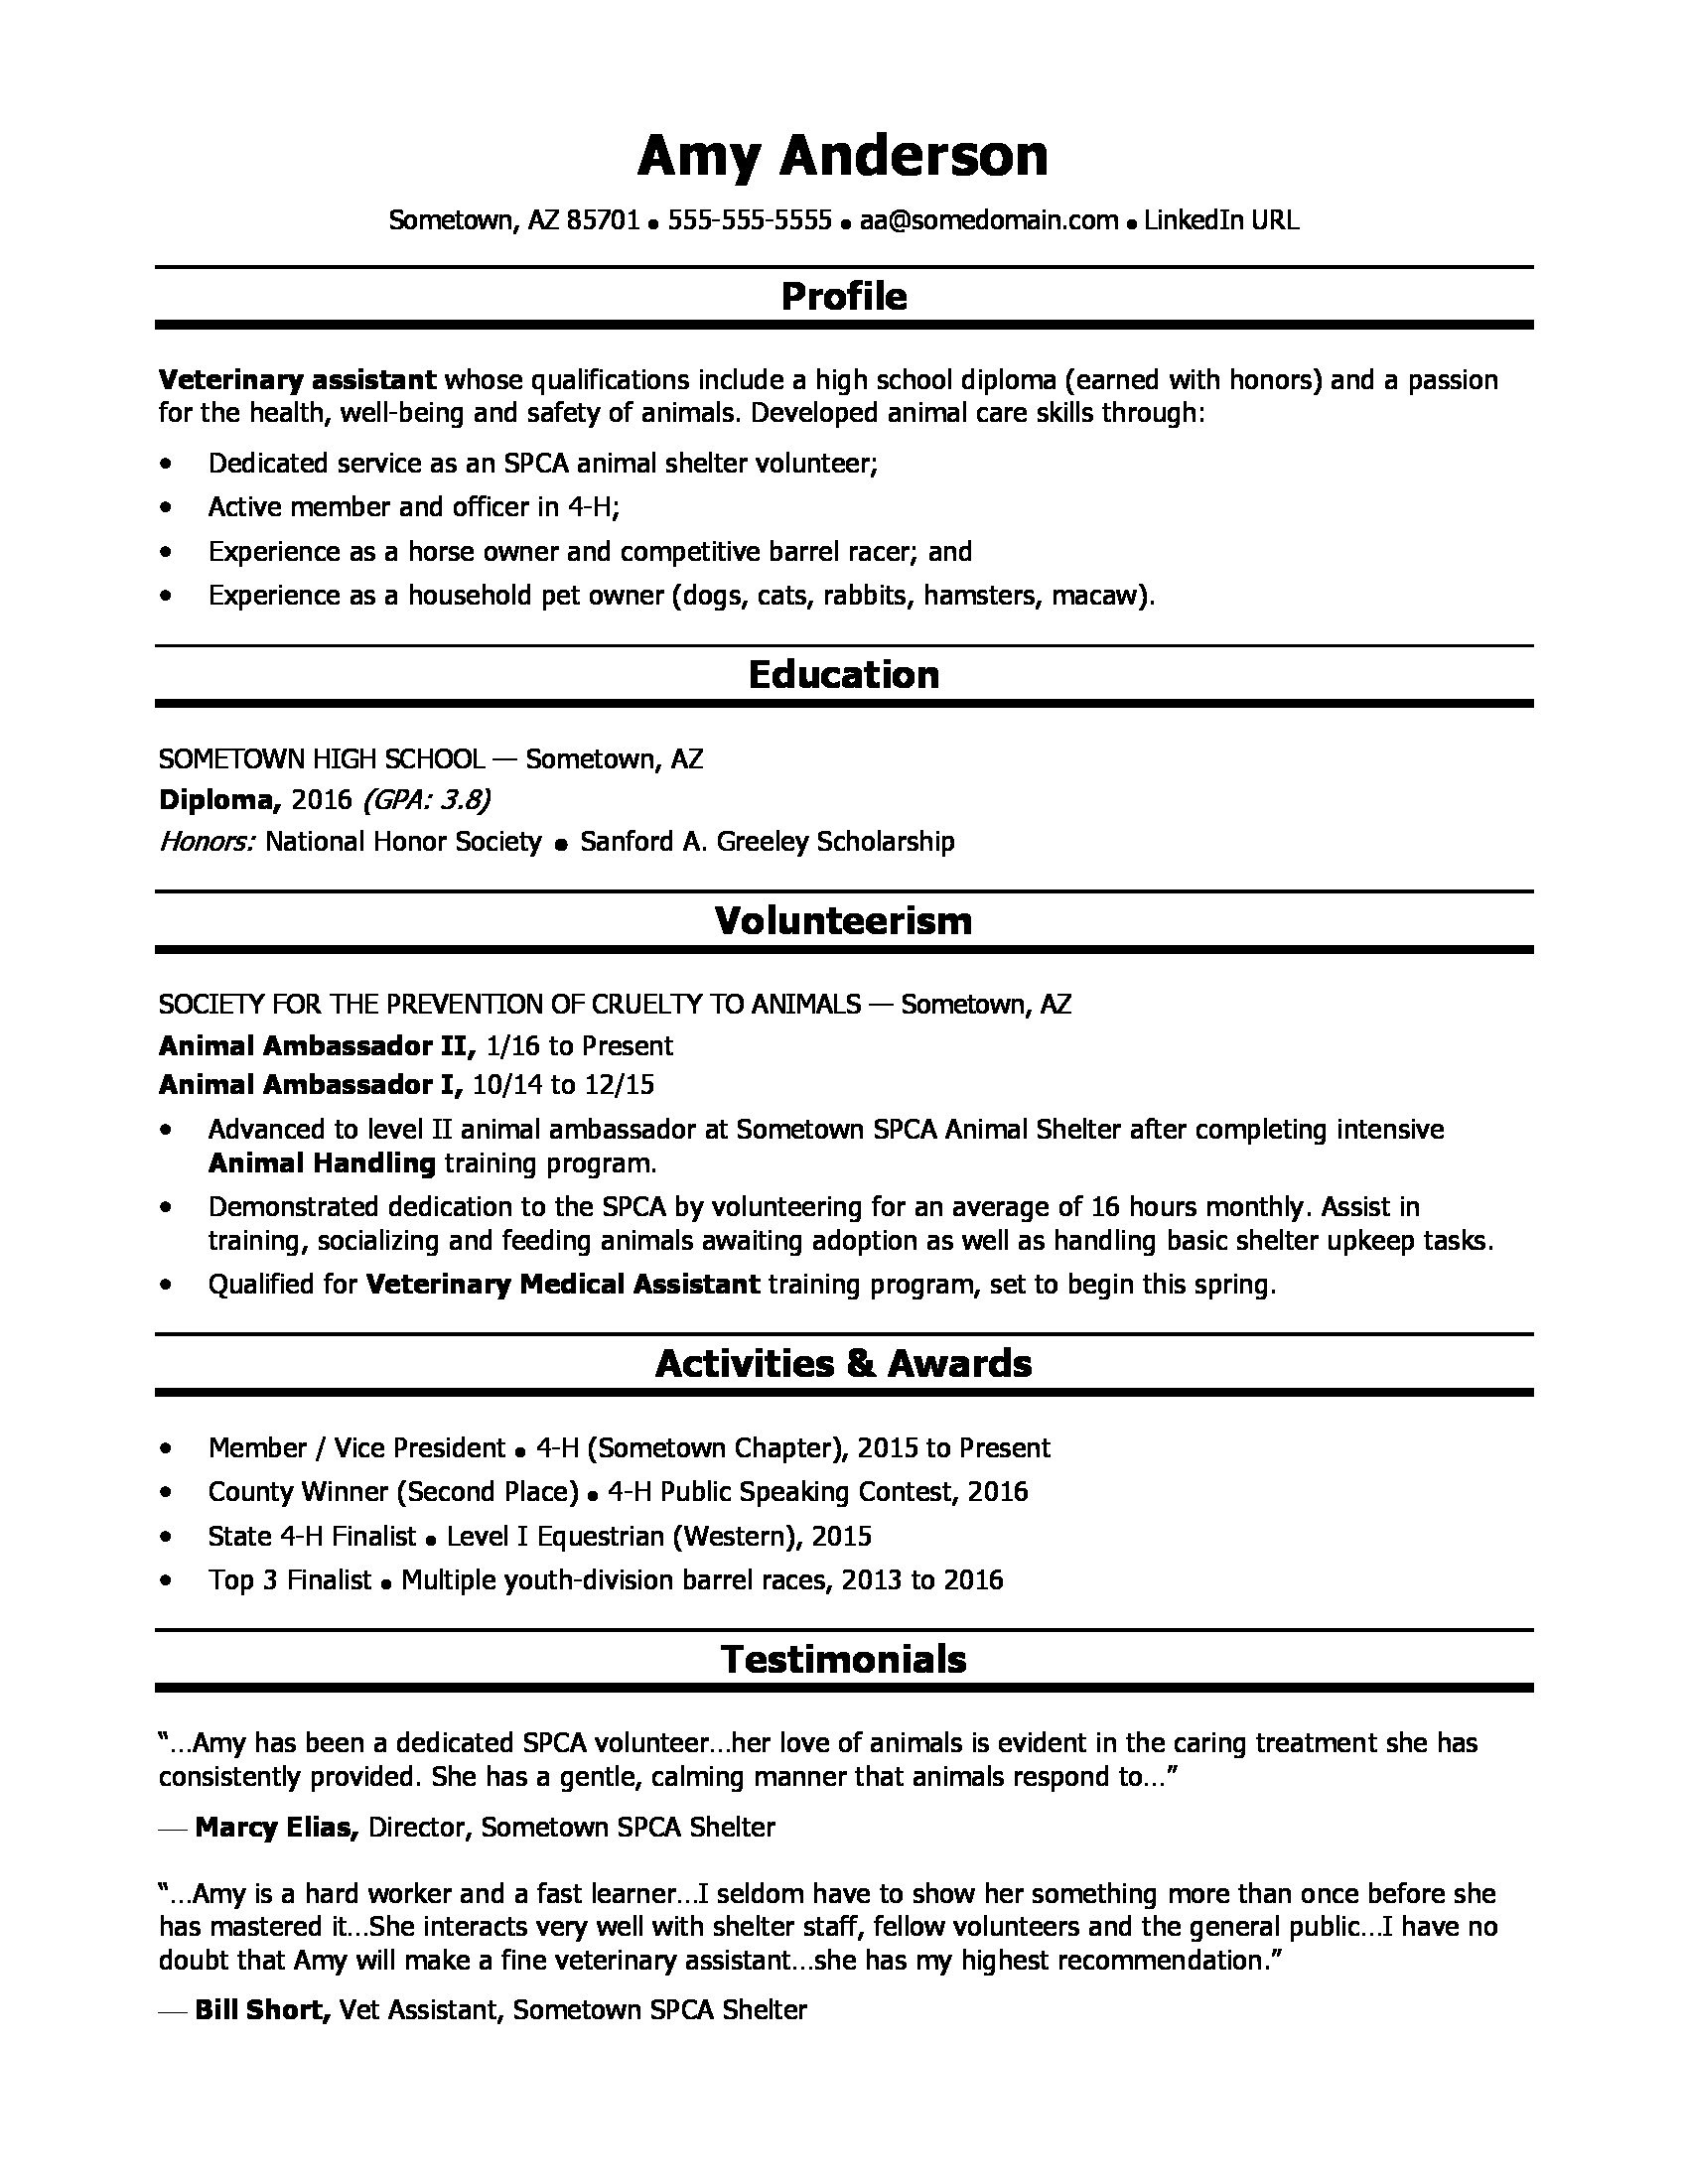 Sample Resume for Graduate assistant Position High School Grad Resume Sample Monster.com